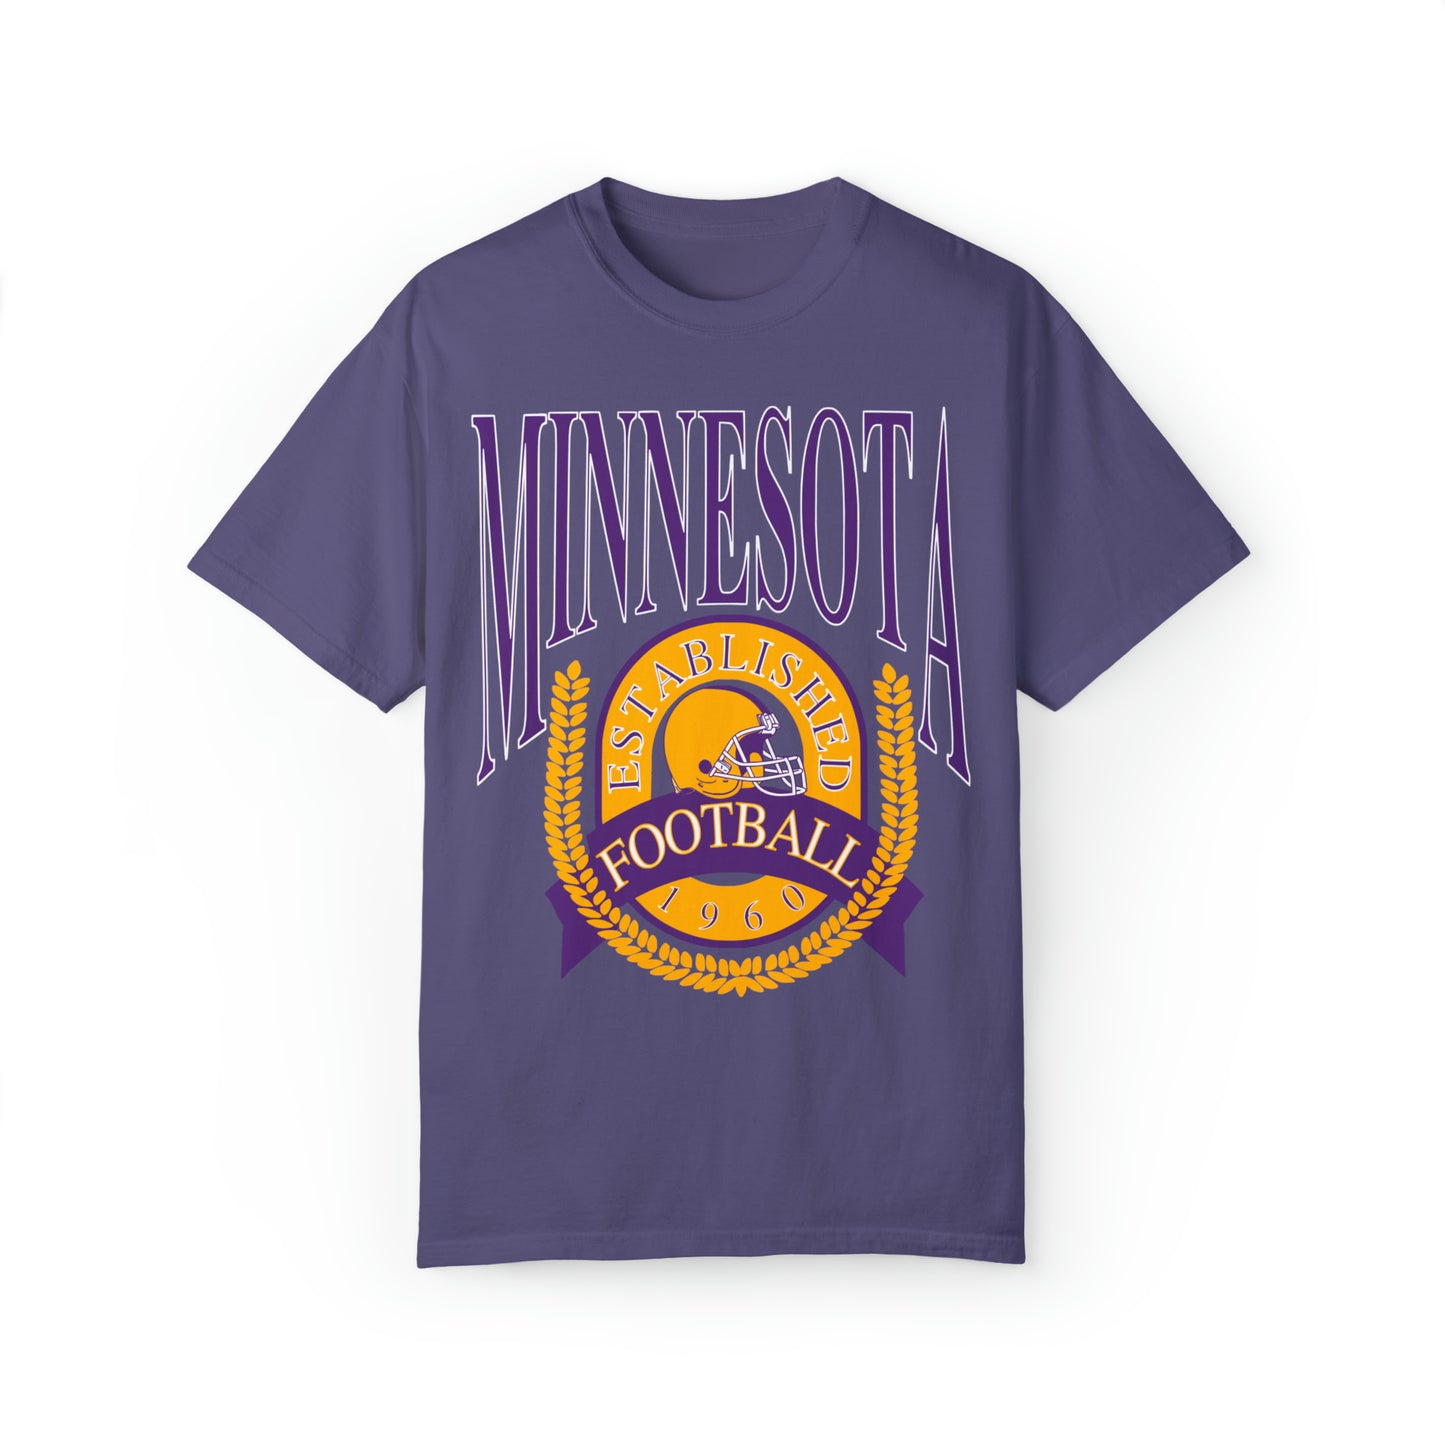 Comfort Colors Throwback Vintage Minnesota Vikings NFL Football Tee - Short Sleeve T-Shirt Unisex Men's Women's Oversized Apparel - Design 1